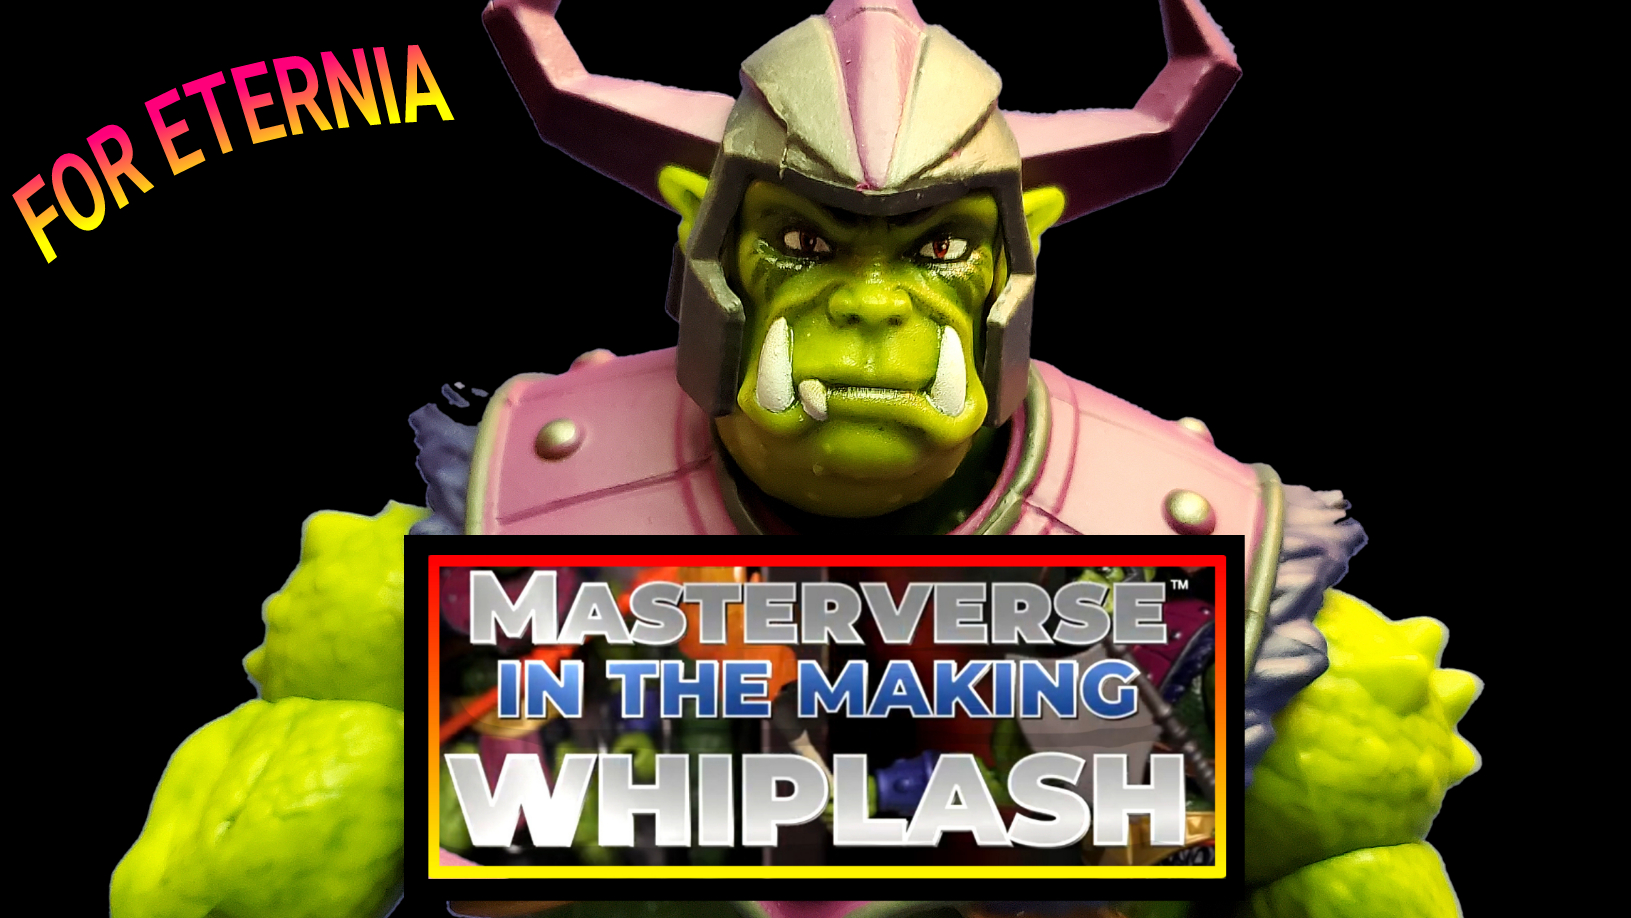 Masterverse New Eternia Whiplash Promo Video Released